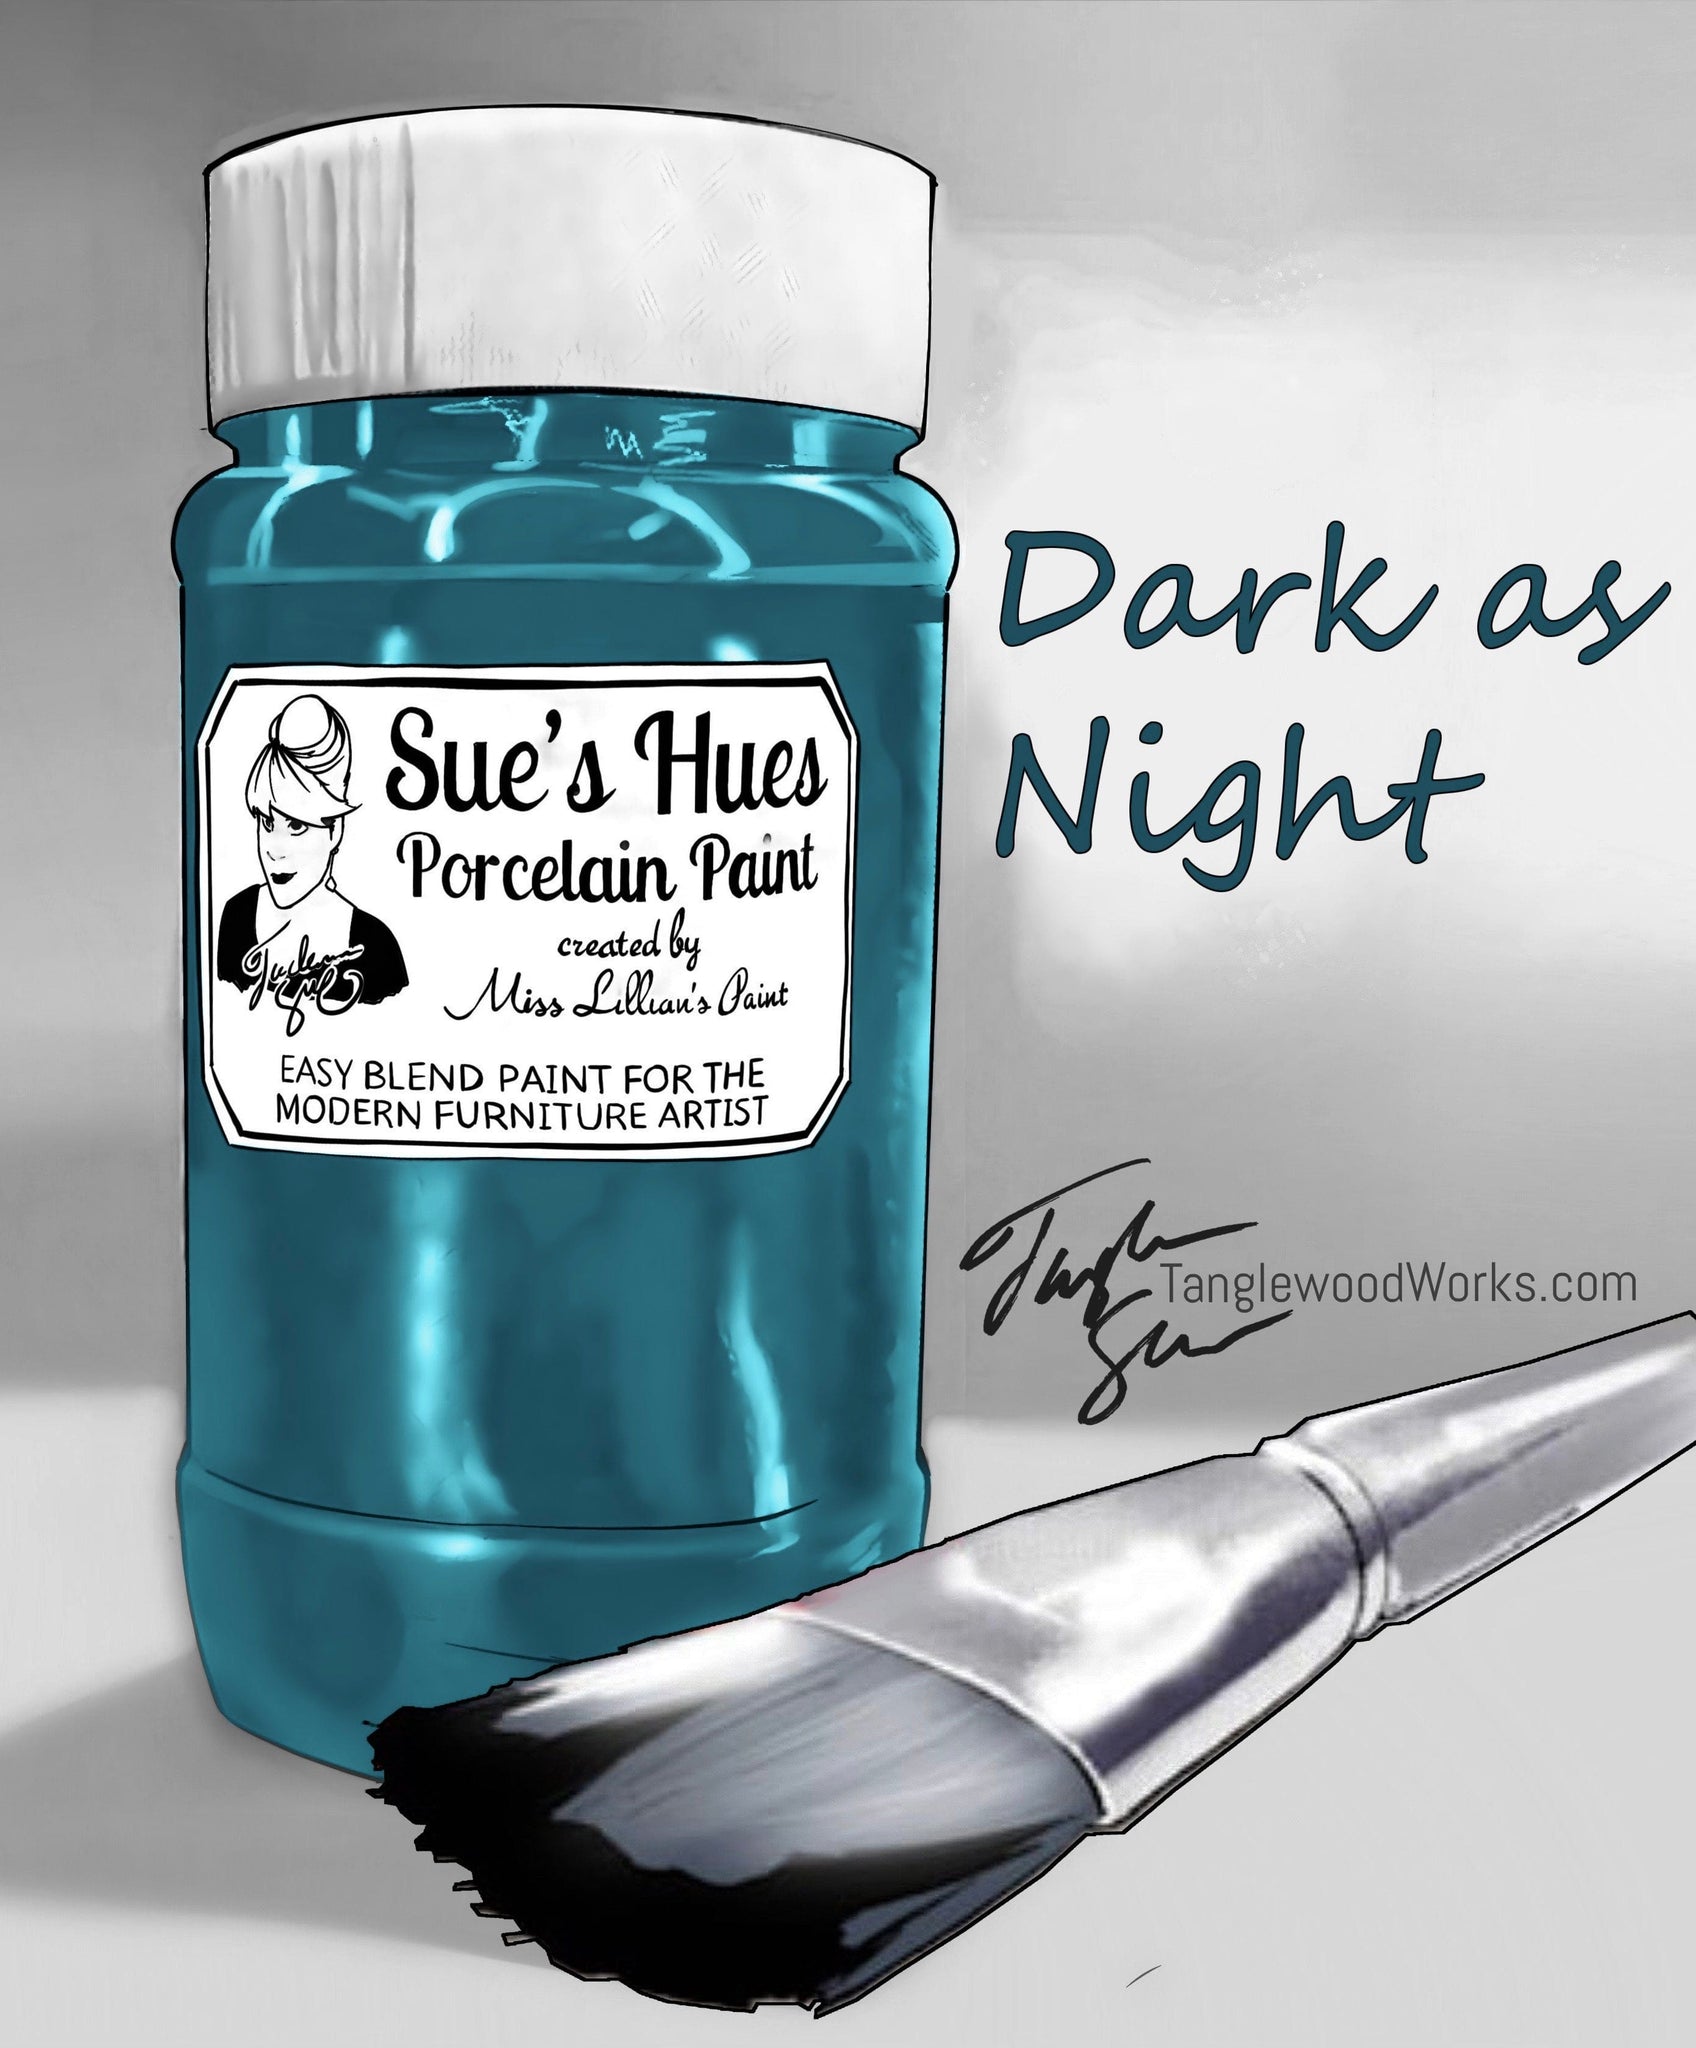 Sue's Hues Porcelain Paint: Dark as Night (Blue, Green, Teal, Aqua) –  Tanglewood Works